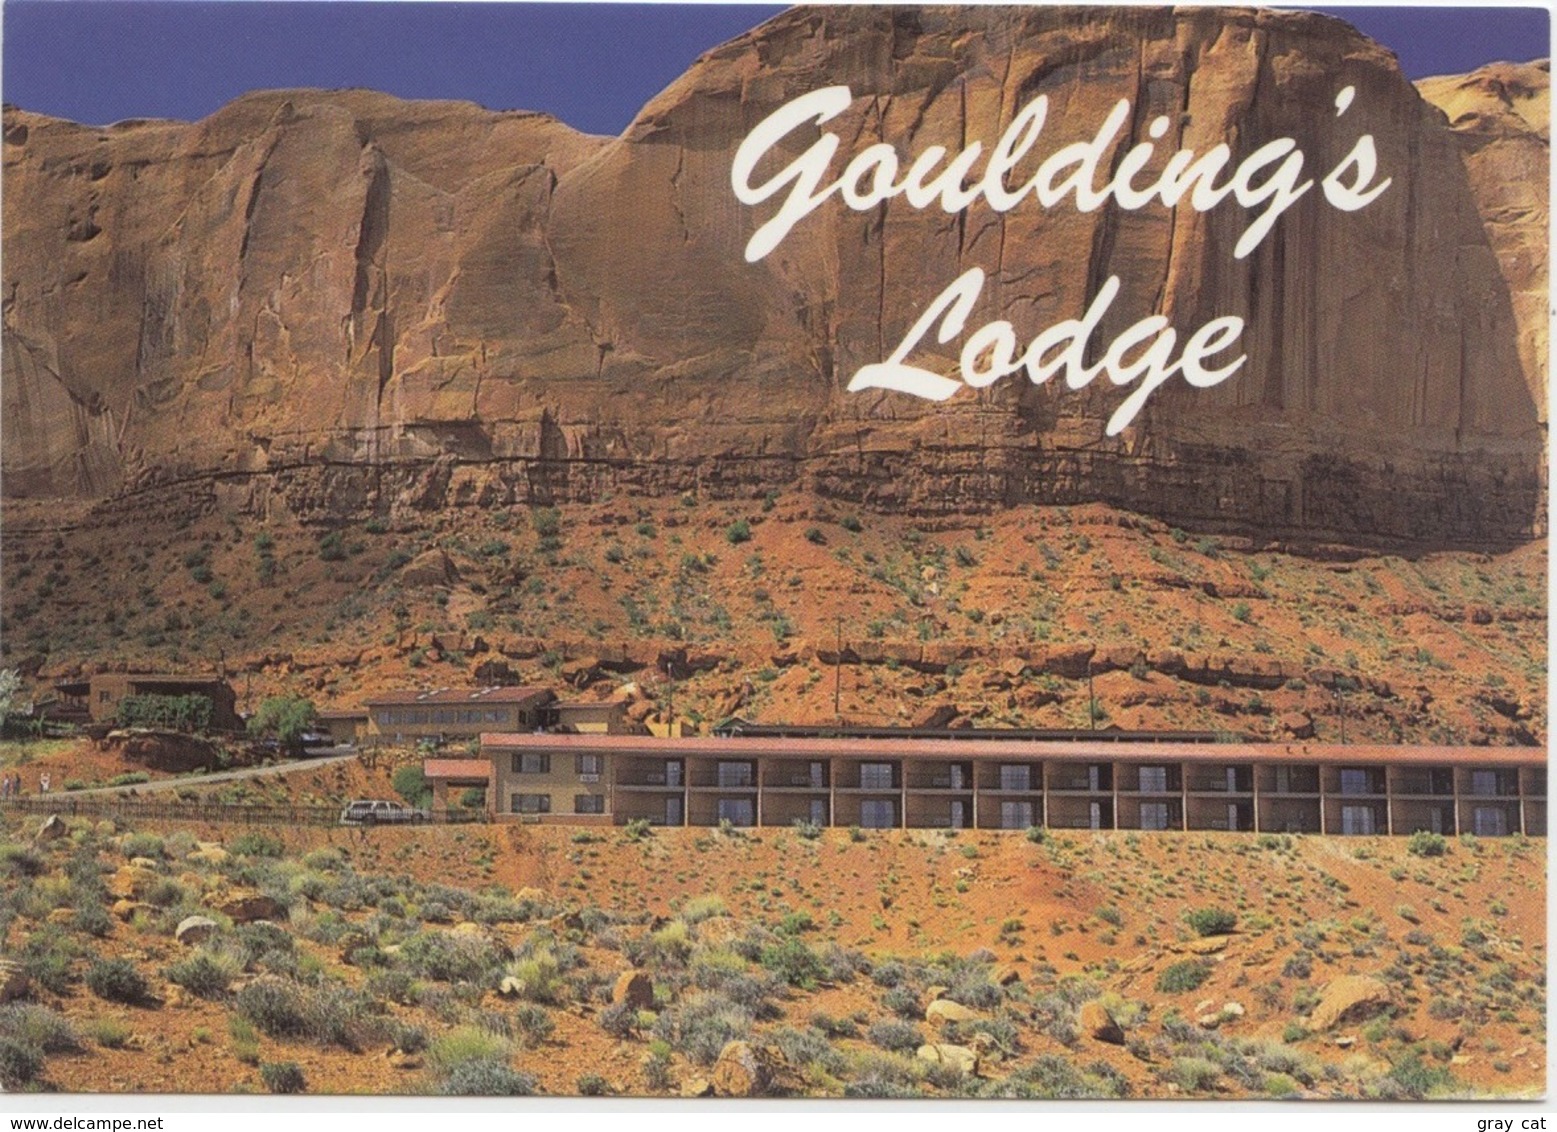 Goulding's Lodge, Monument Valley, Utah, Unused Postcard [20909] - Monument Valley